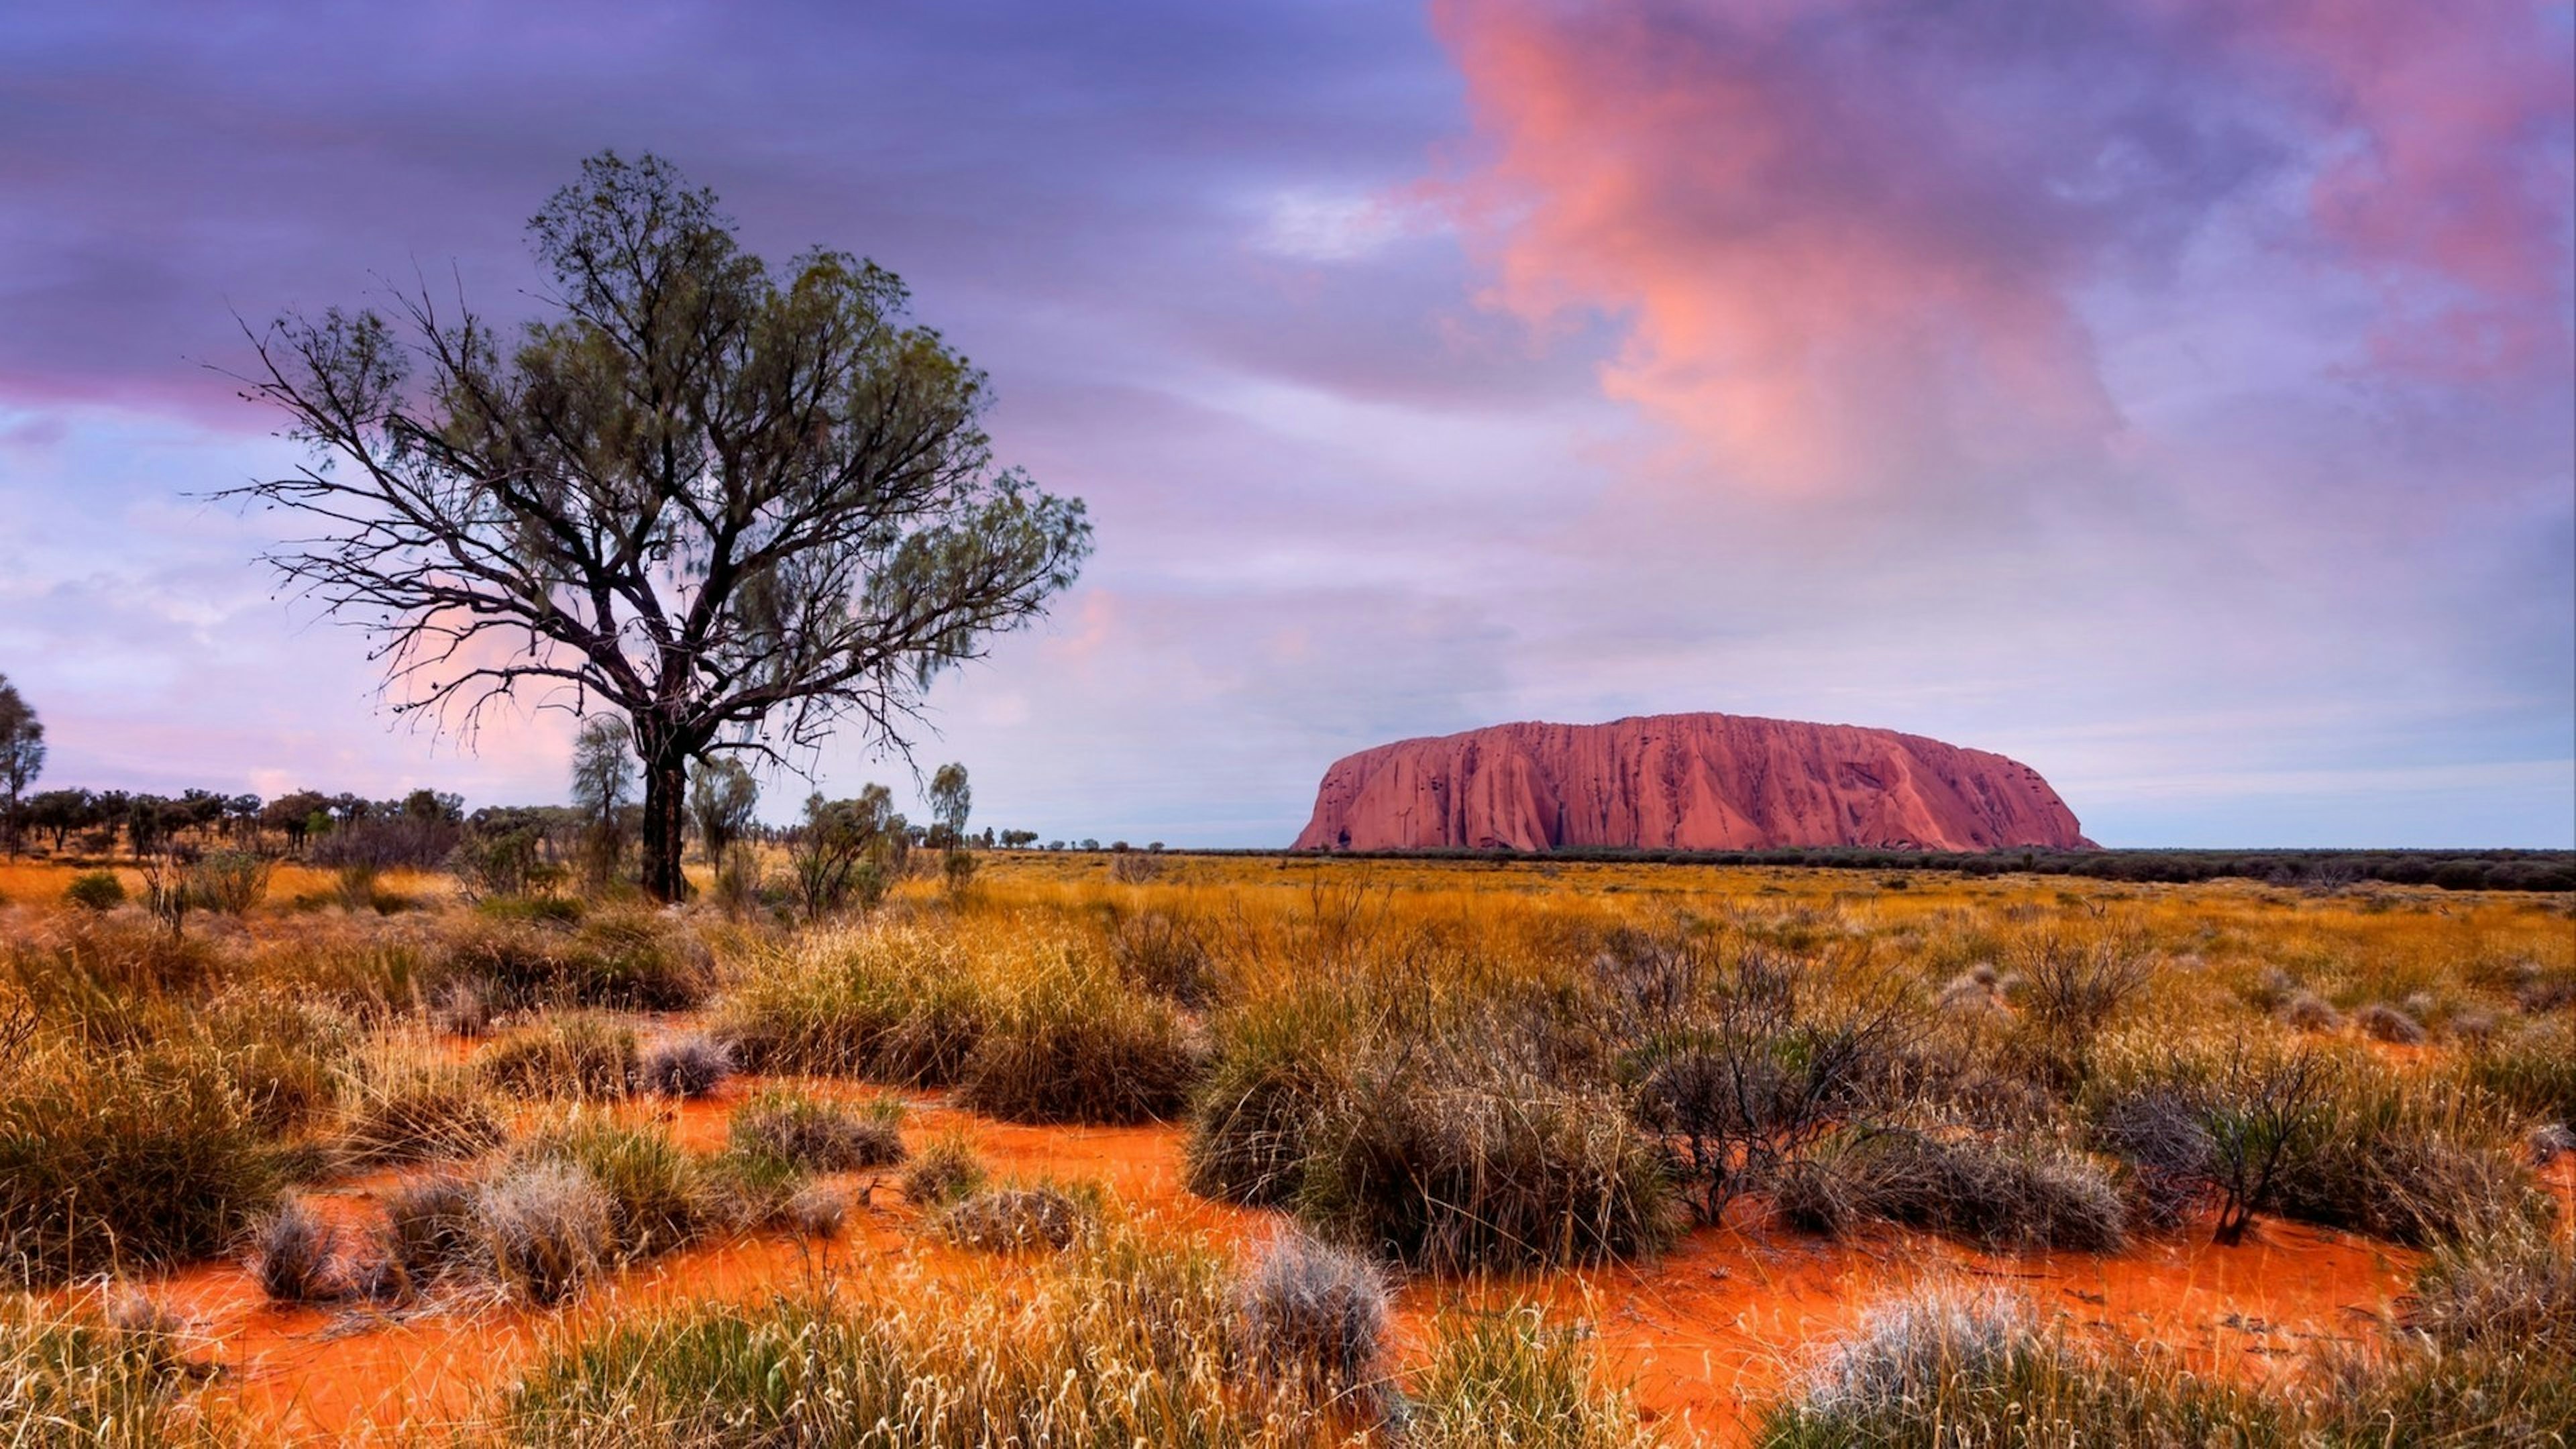 Uluru (Ayer's Rock) in Uluru-Kata Tjuta National Park is a massive sandstone monolith in the heart of the Northern Territory’s arid  Red Centre